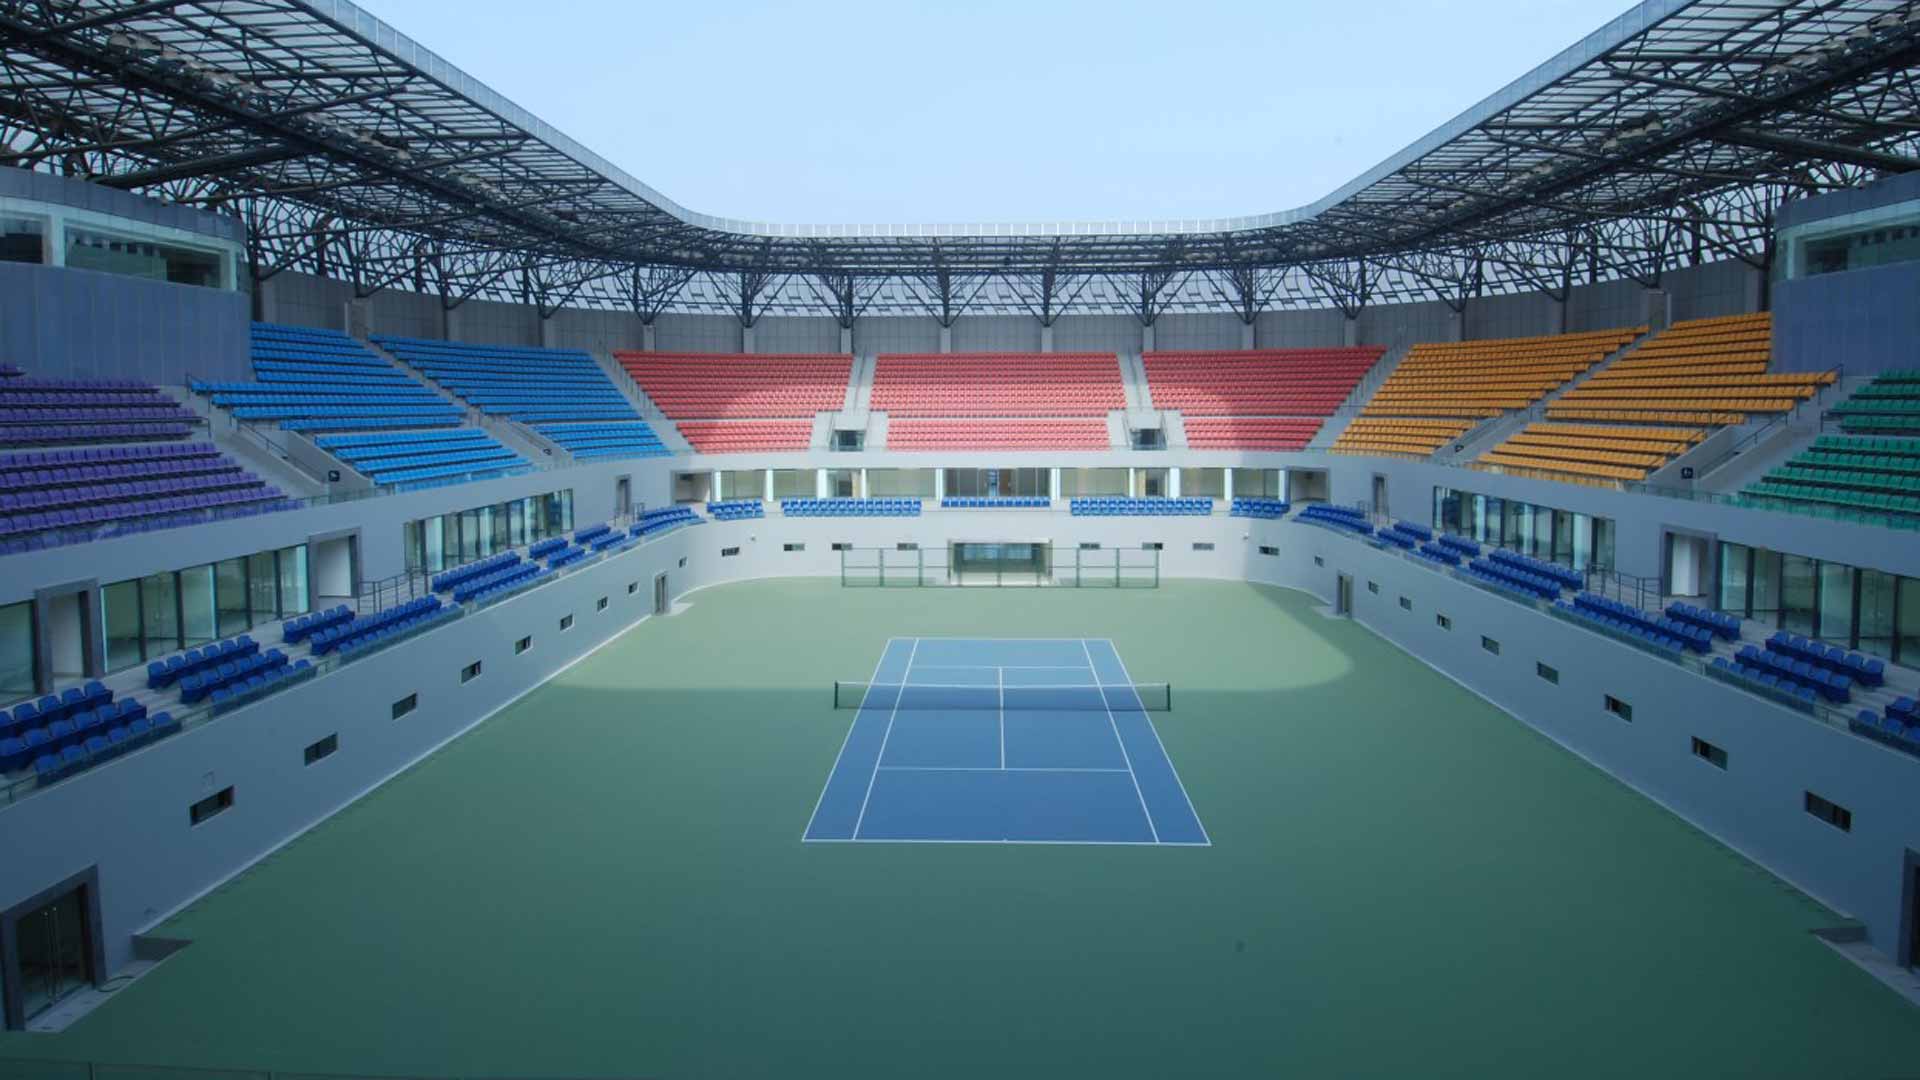 http://www.atpworldtour.com/en/news/www.atpworldtour.com/~/media/images/news/2016/06/29/10/24/chengdu-2016-stadium-court.jpg